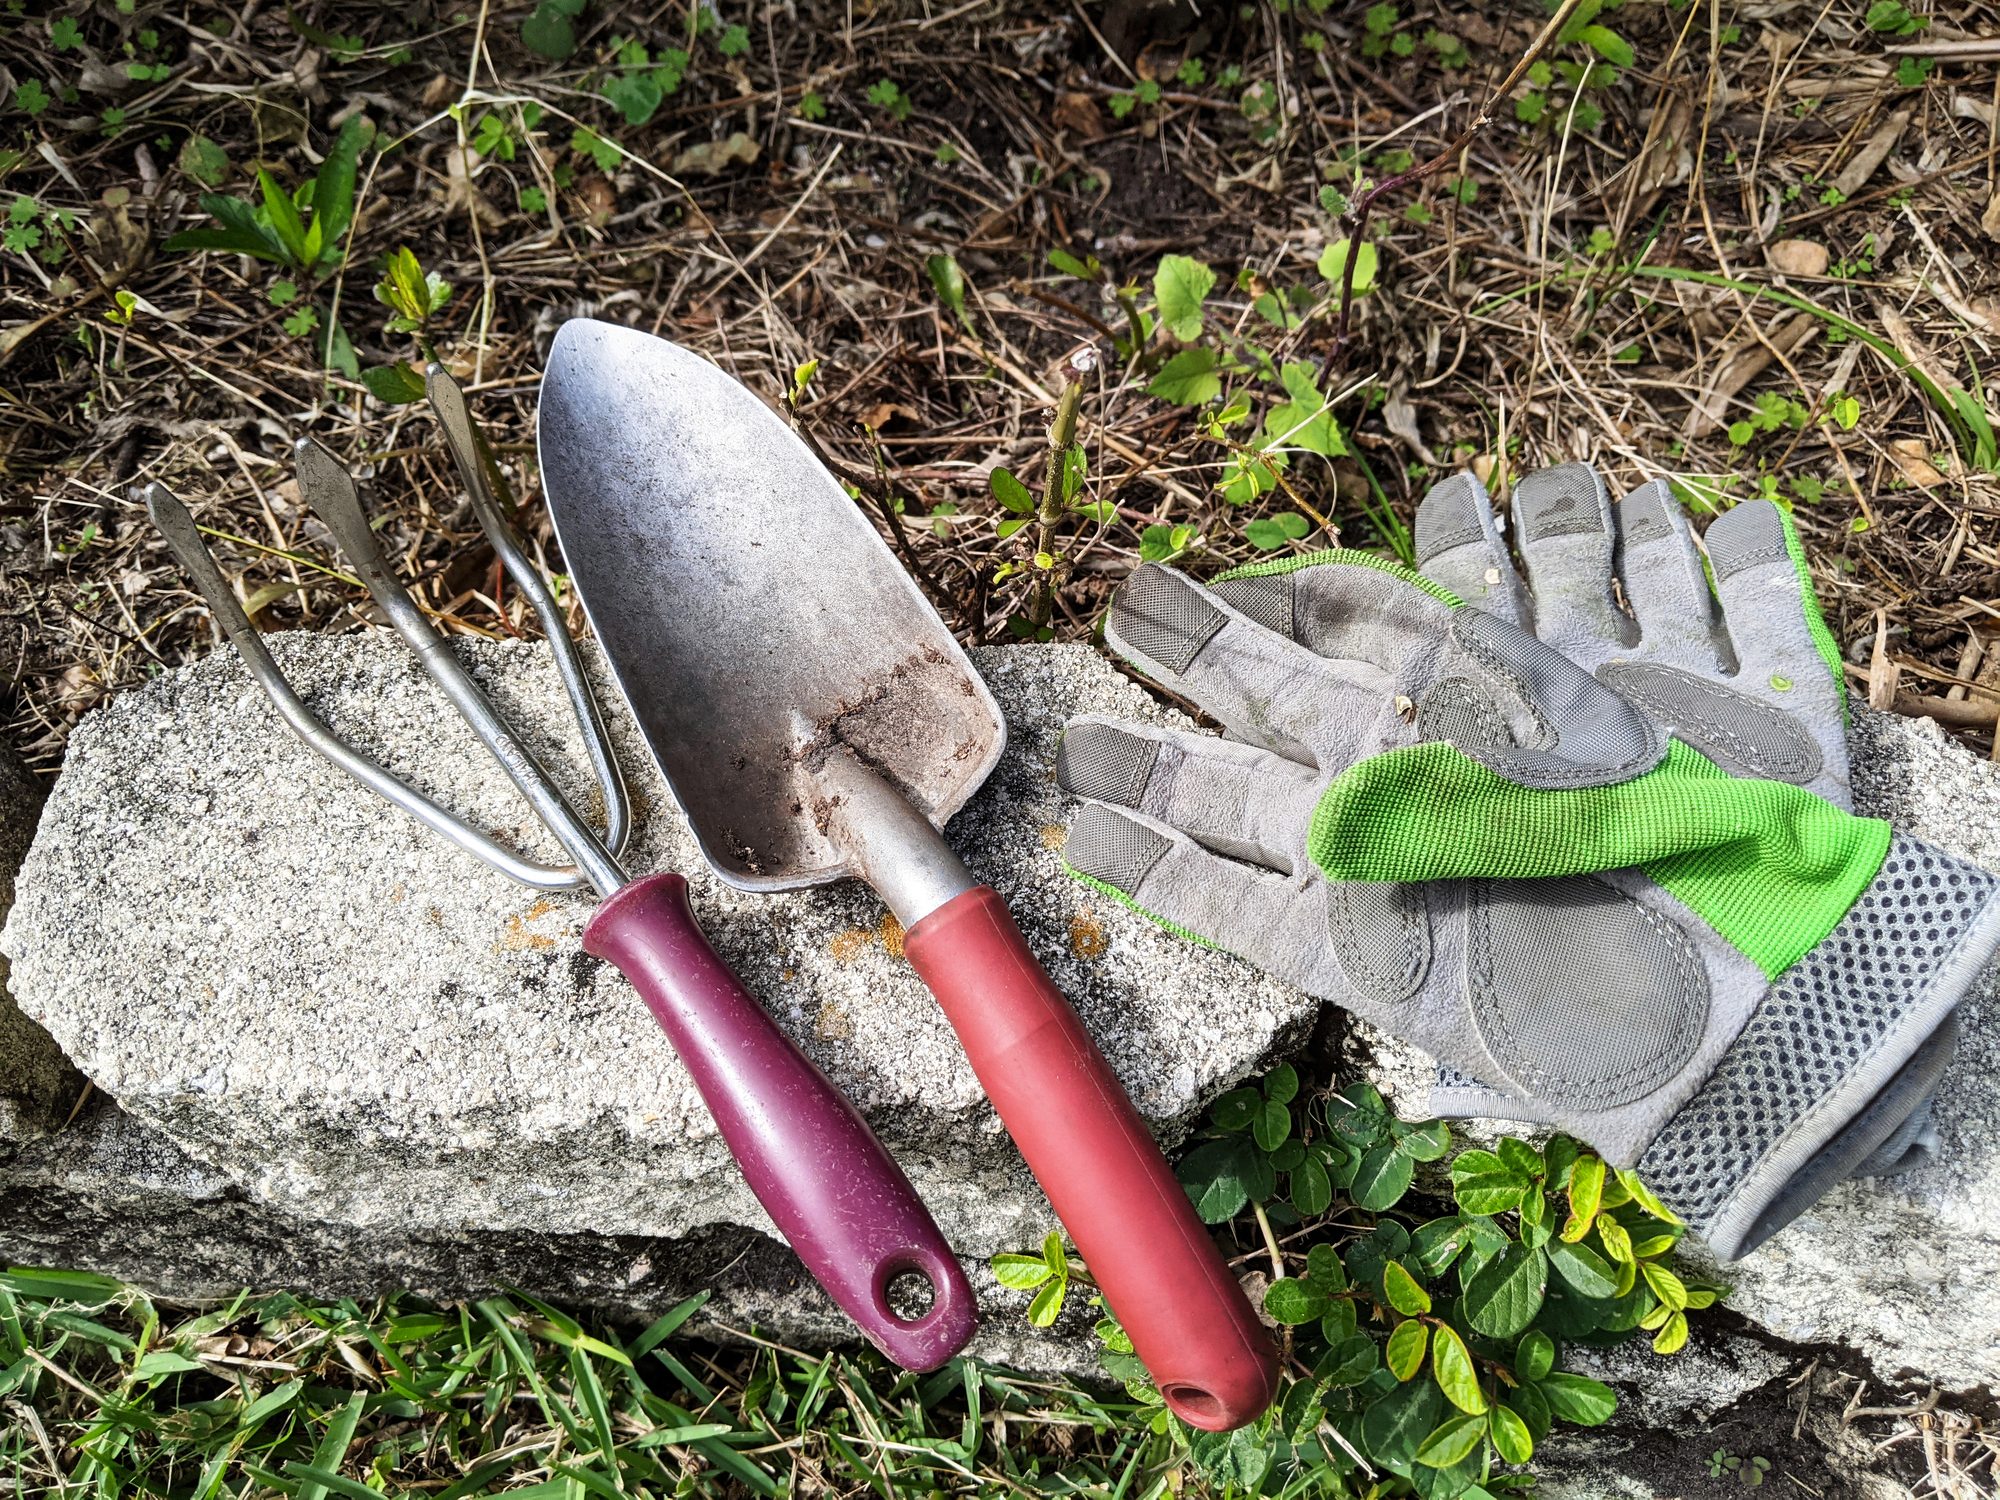 Get Organized with Top Garden Tool Storage Ideas